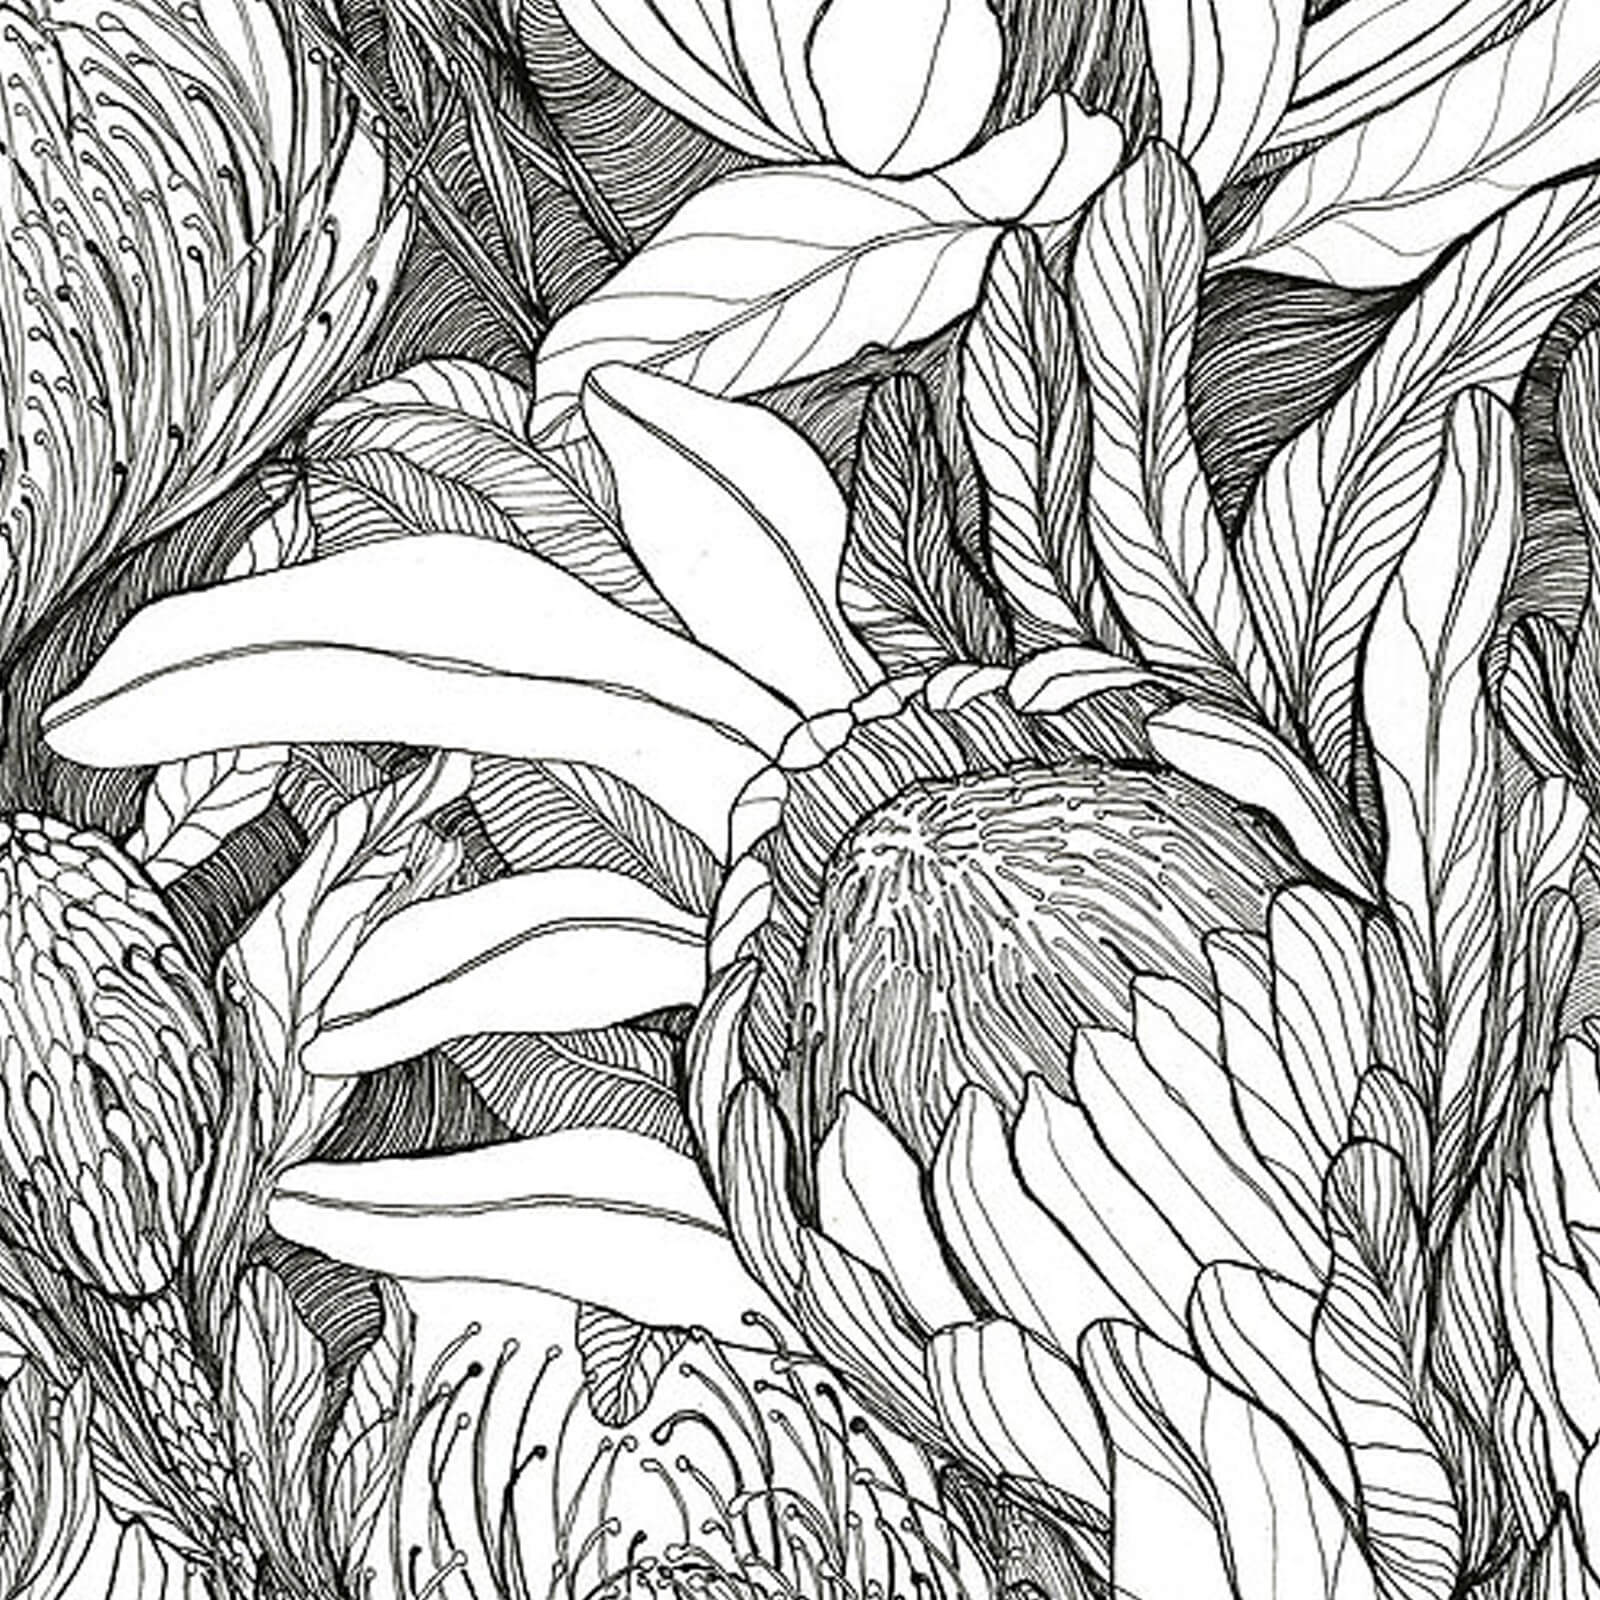 Hand Drawn Botanical Illustration Print - Protea Field - 11x14